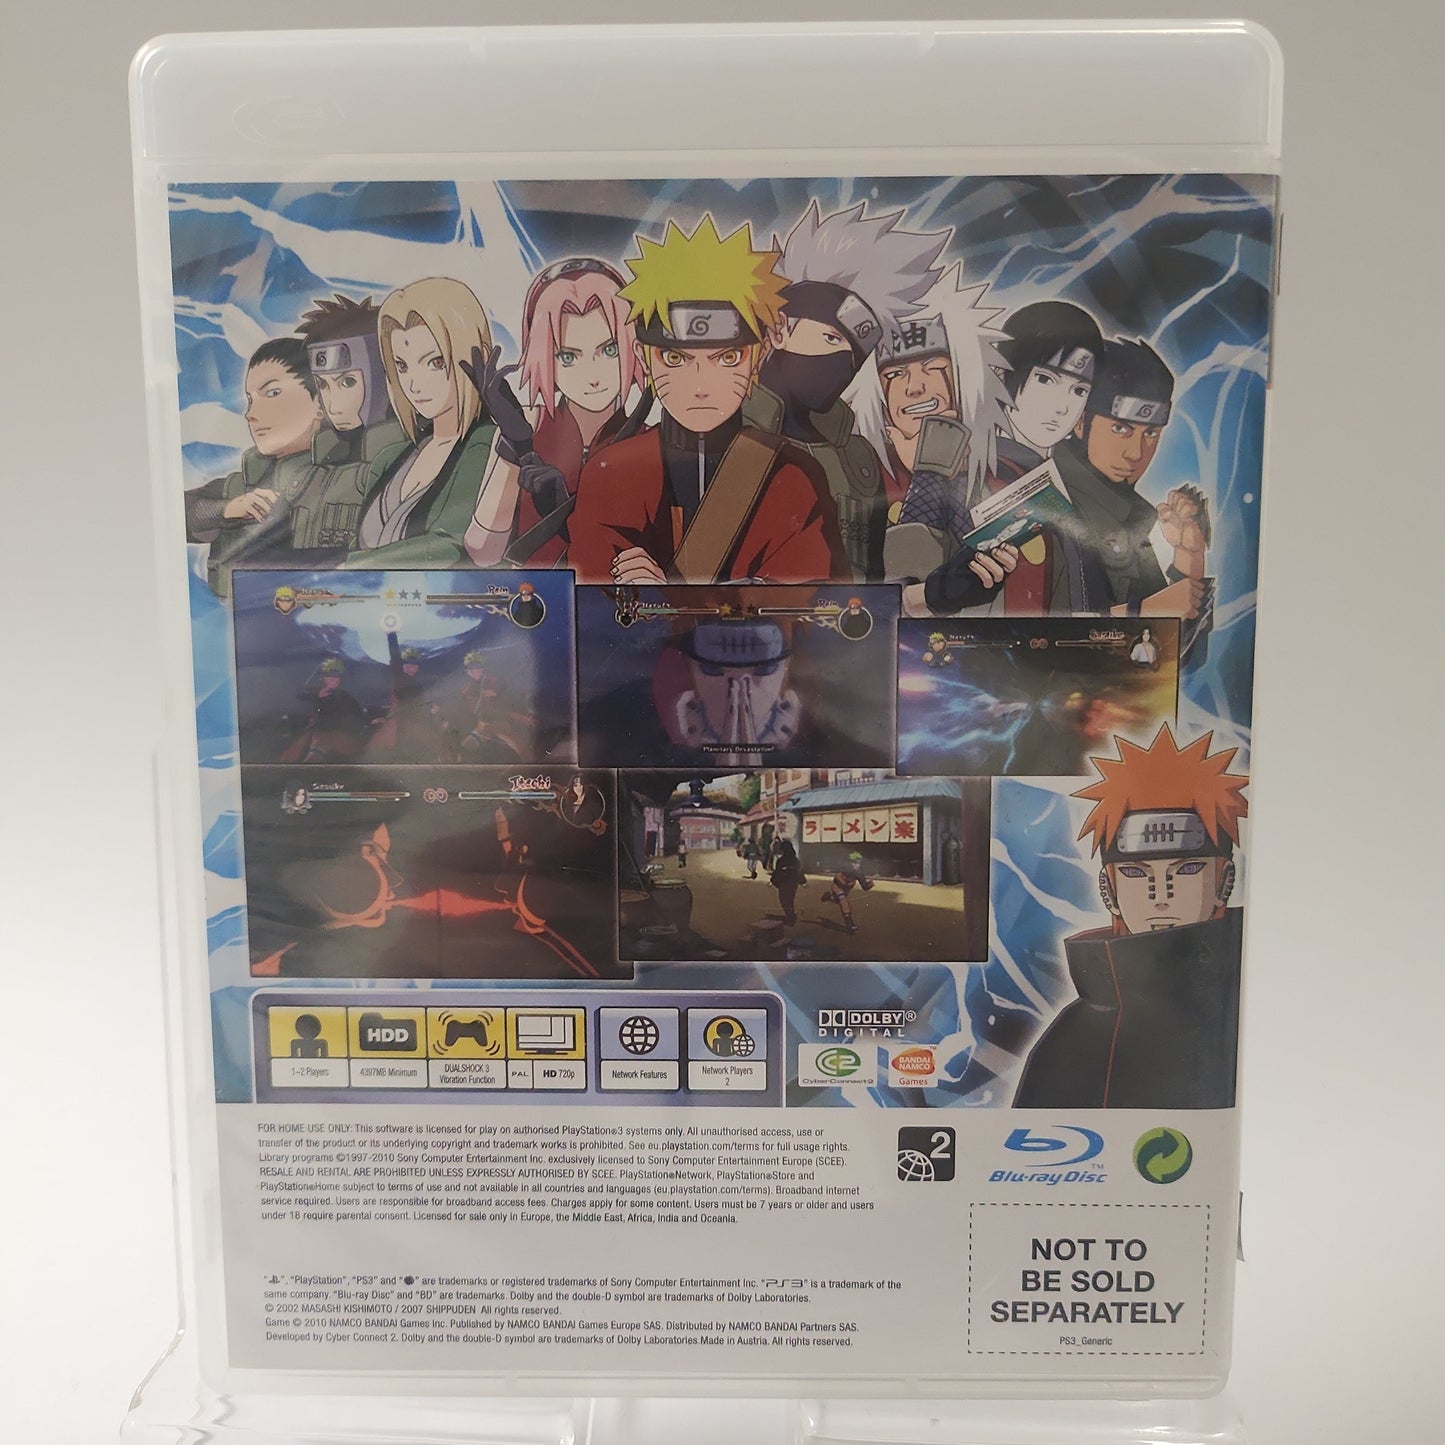 Naruto Shippuden Ultimate Ninja Storm 2 Playstation 3